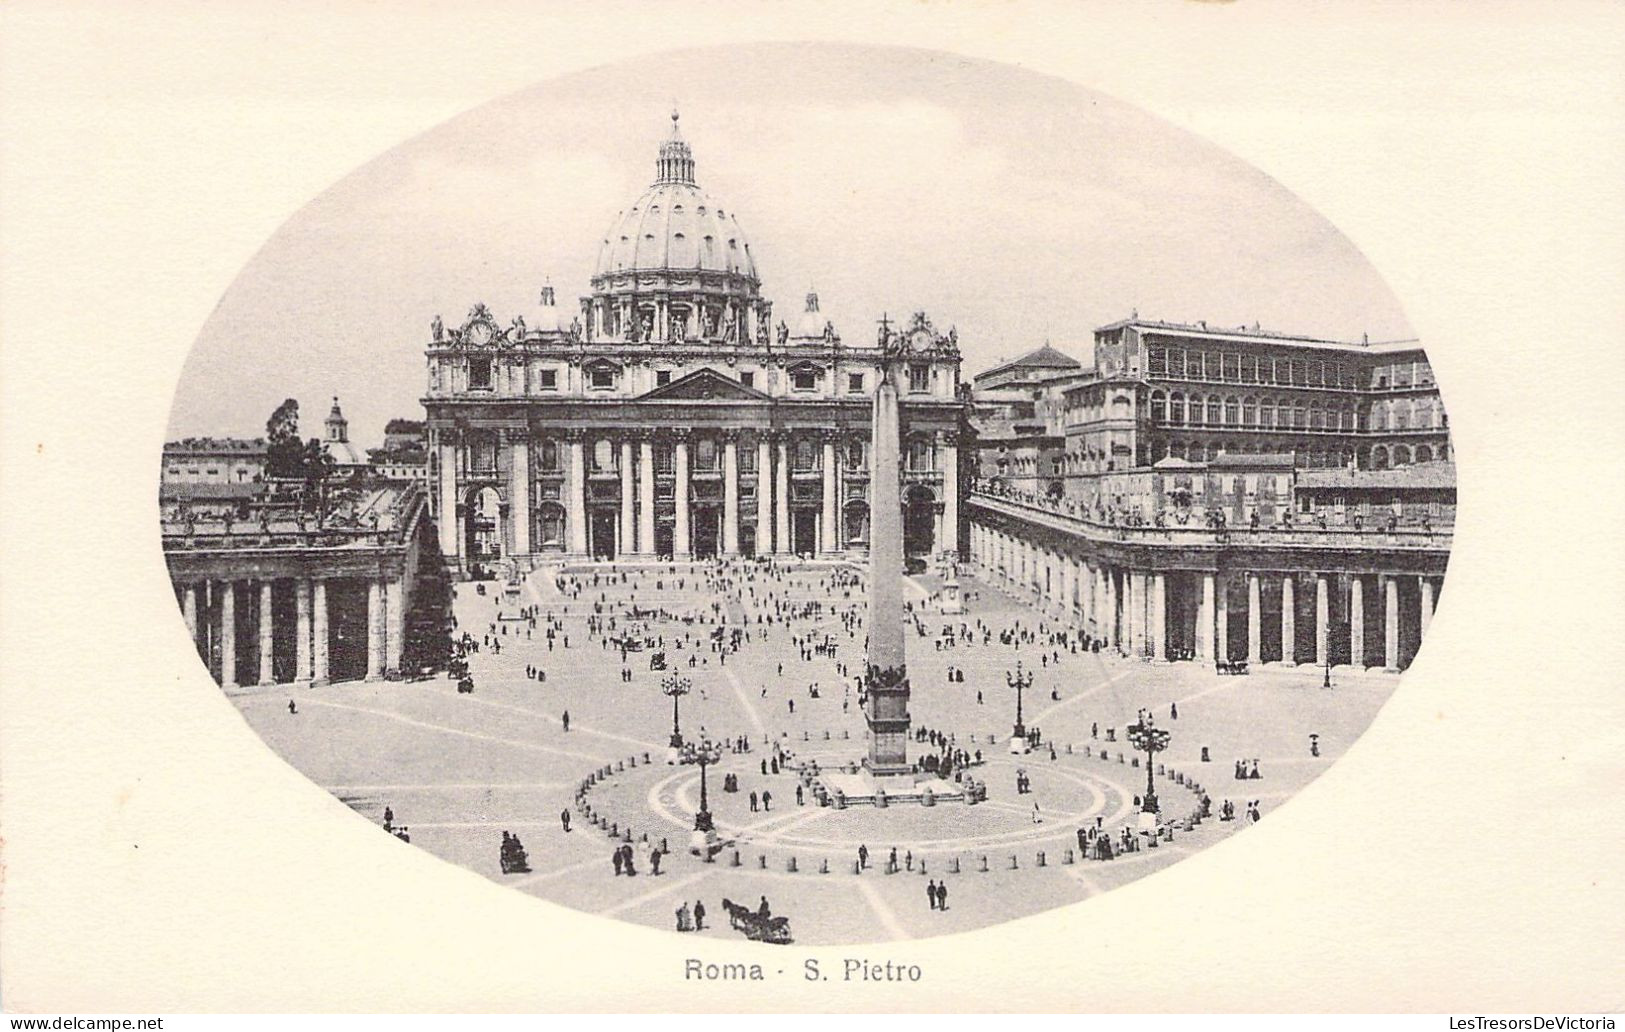 ILTALIE - ROMA - S PIETRO  - Carte Postale Ancienne - Andere Monumente & Gebäude